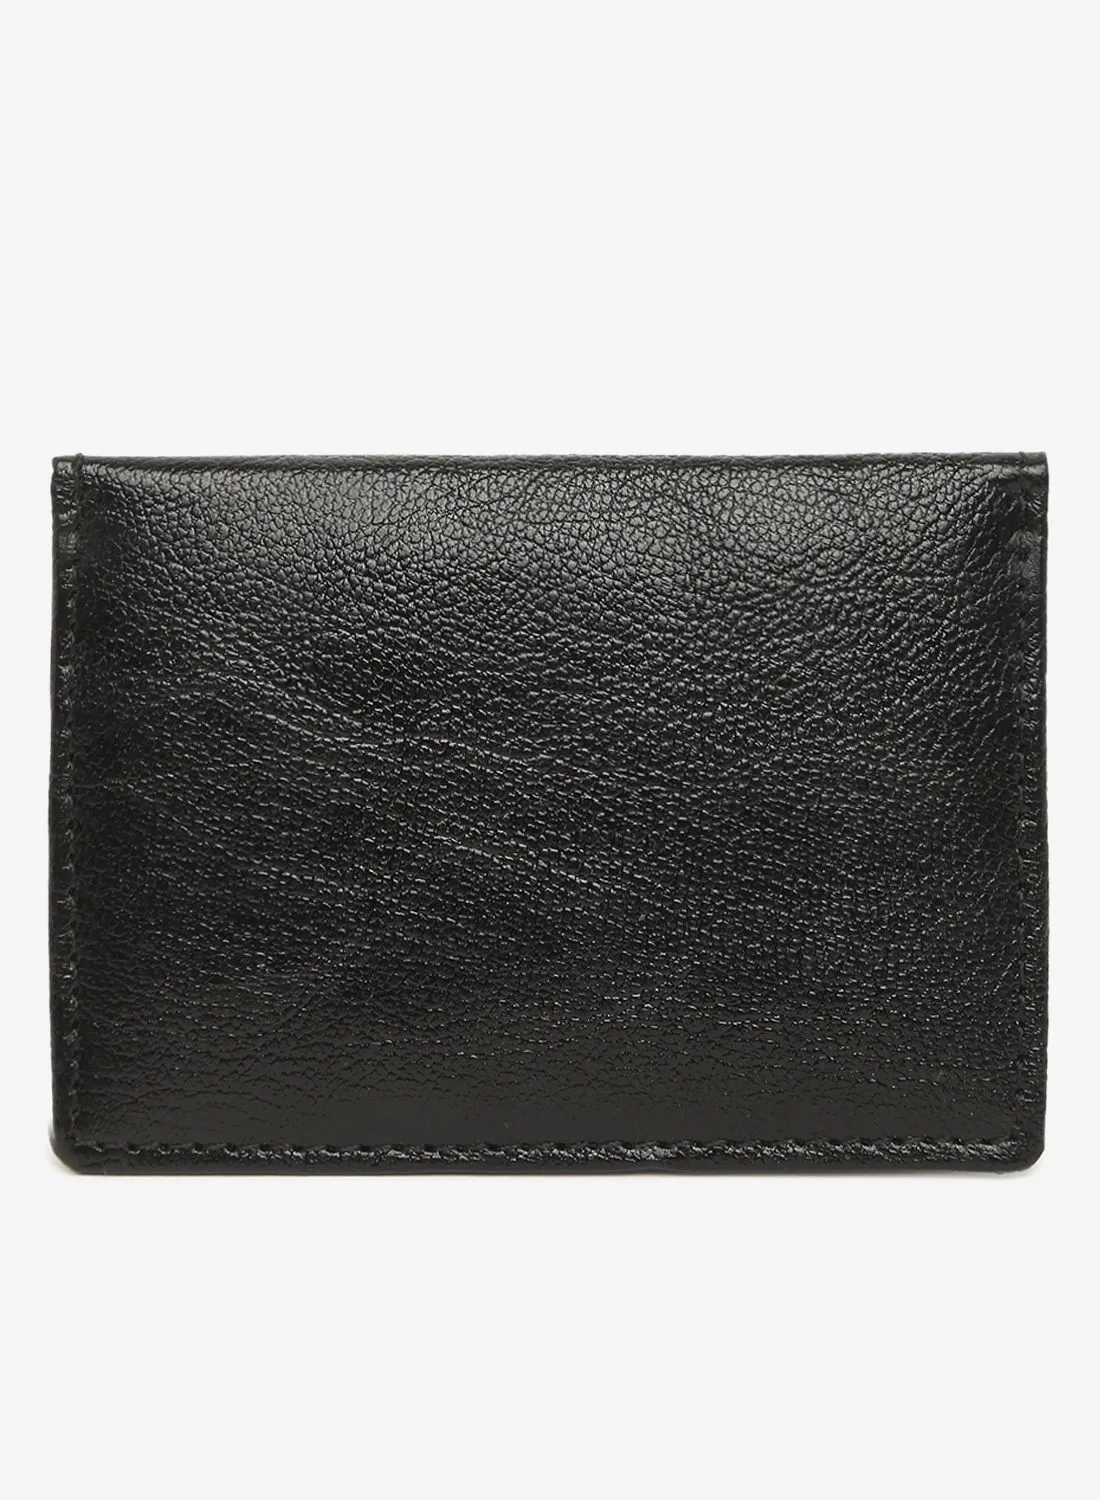 QUWA Bi fold Mens Leather Casual Card holder Black